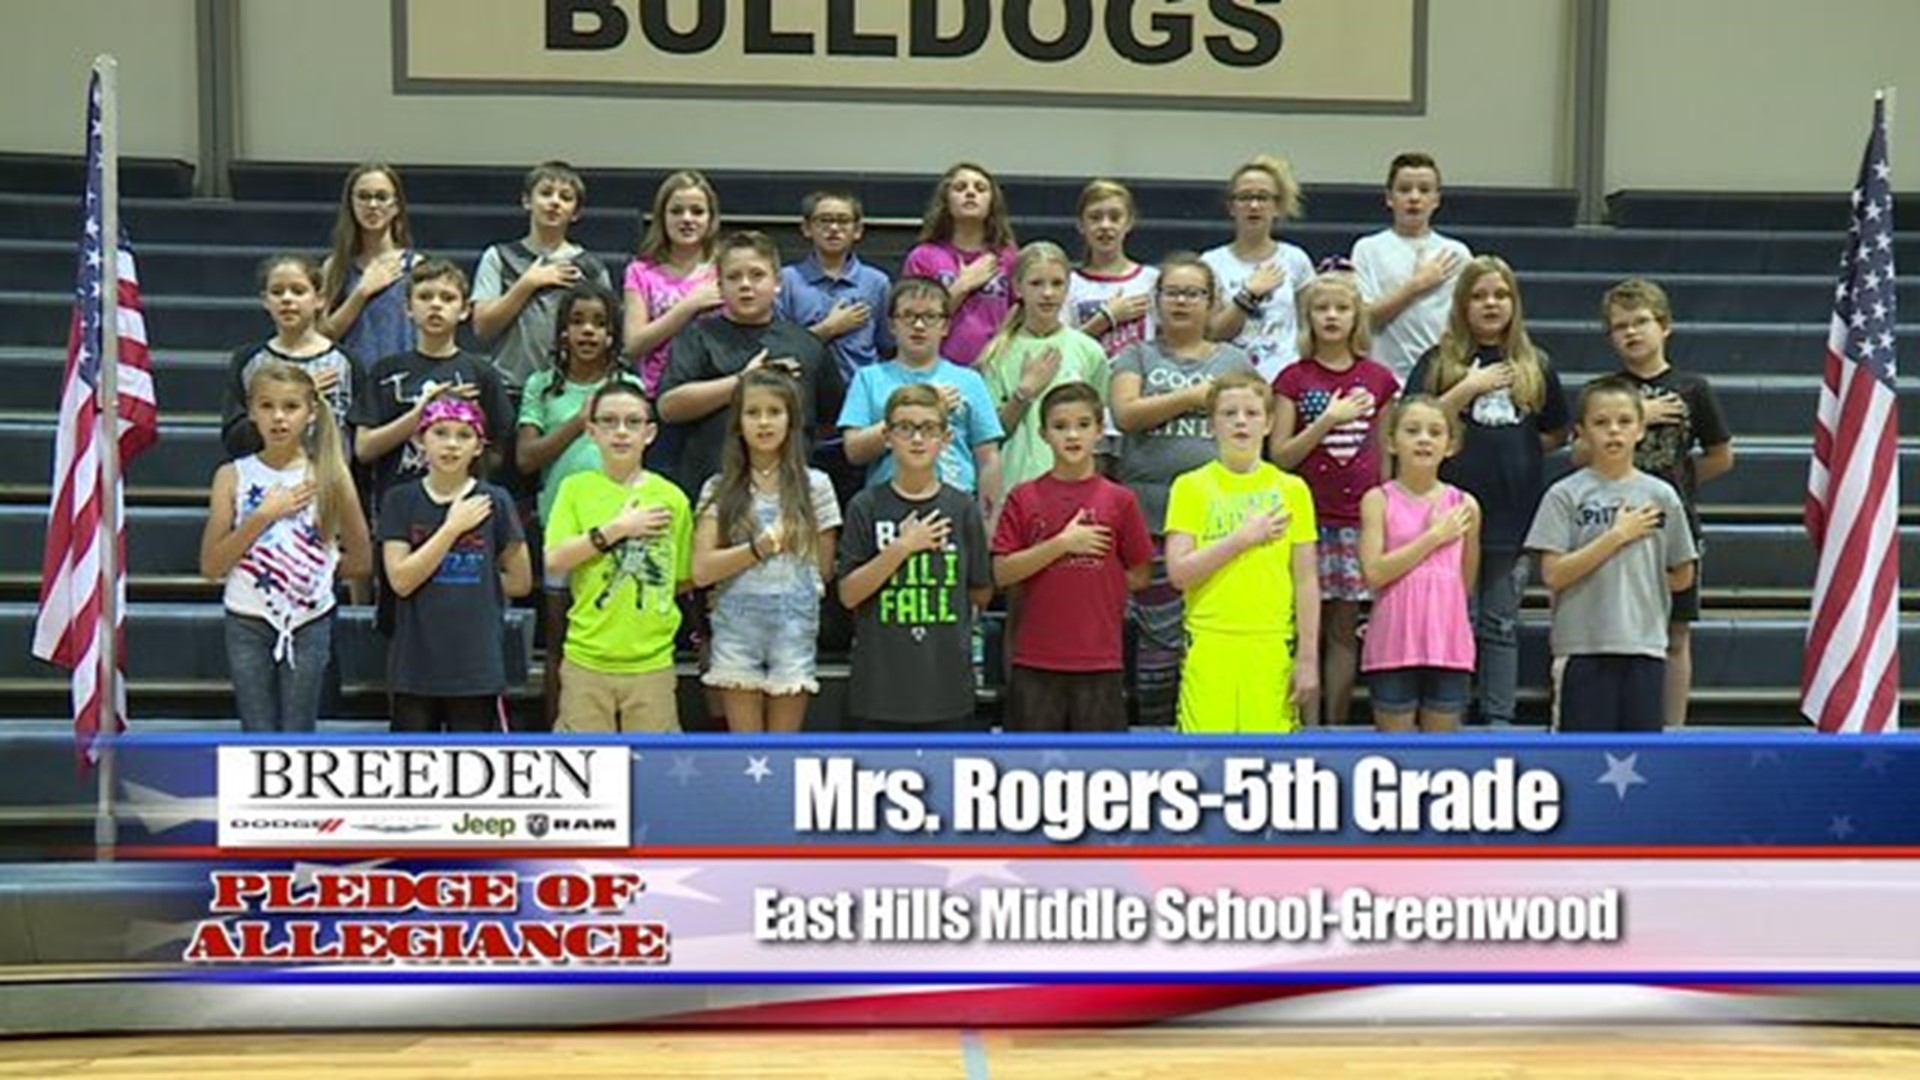 East Hills Middle School, Greenwood - Mrs. Rogers - 5th Grade